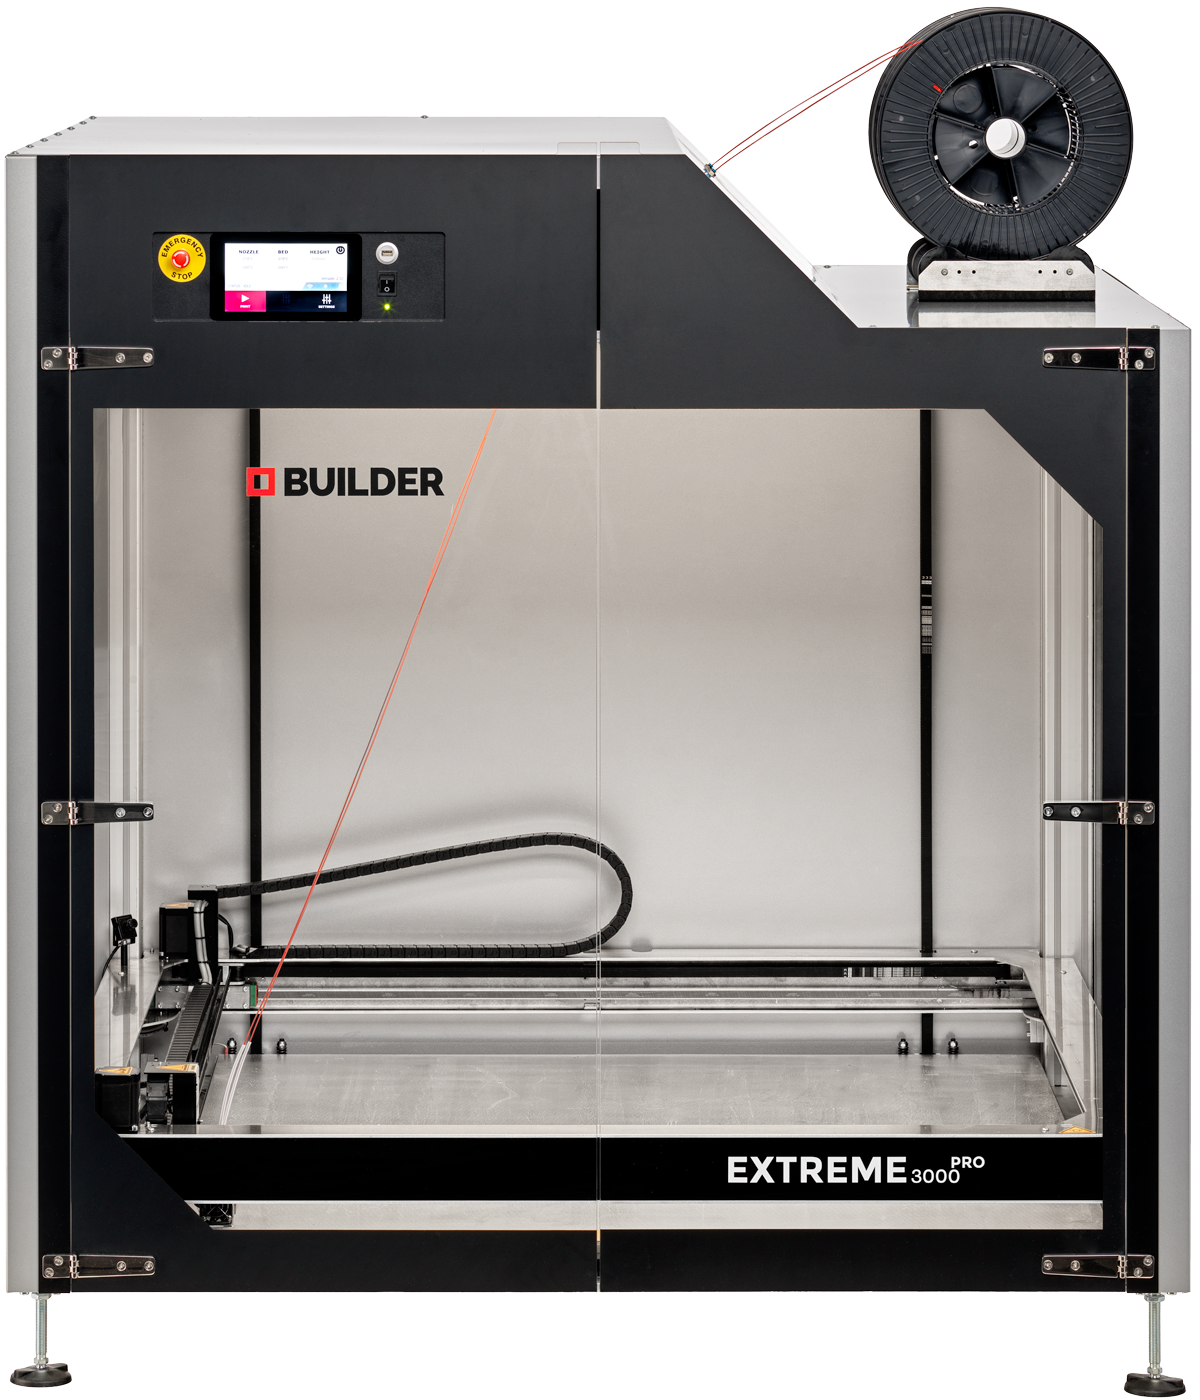 Large Scale 3D - Builder Printers